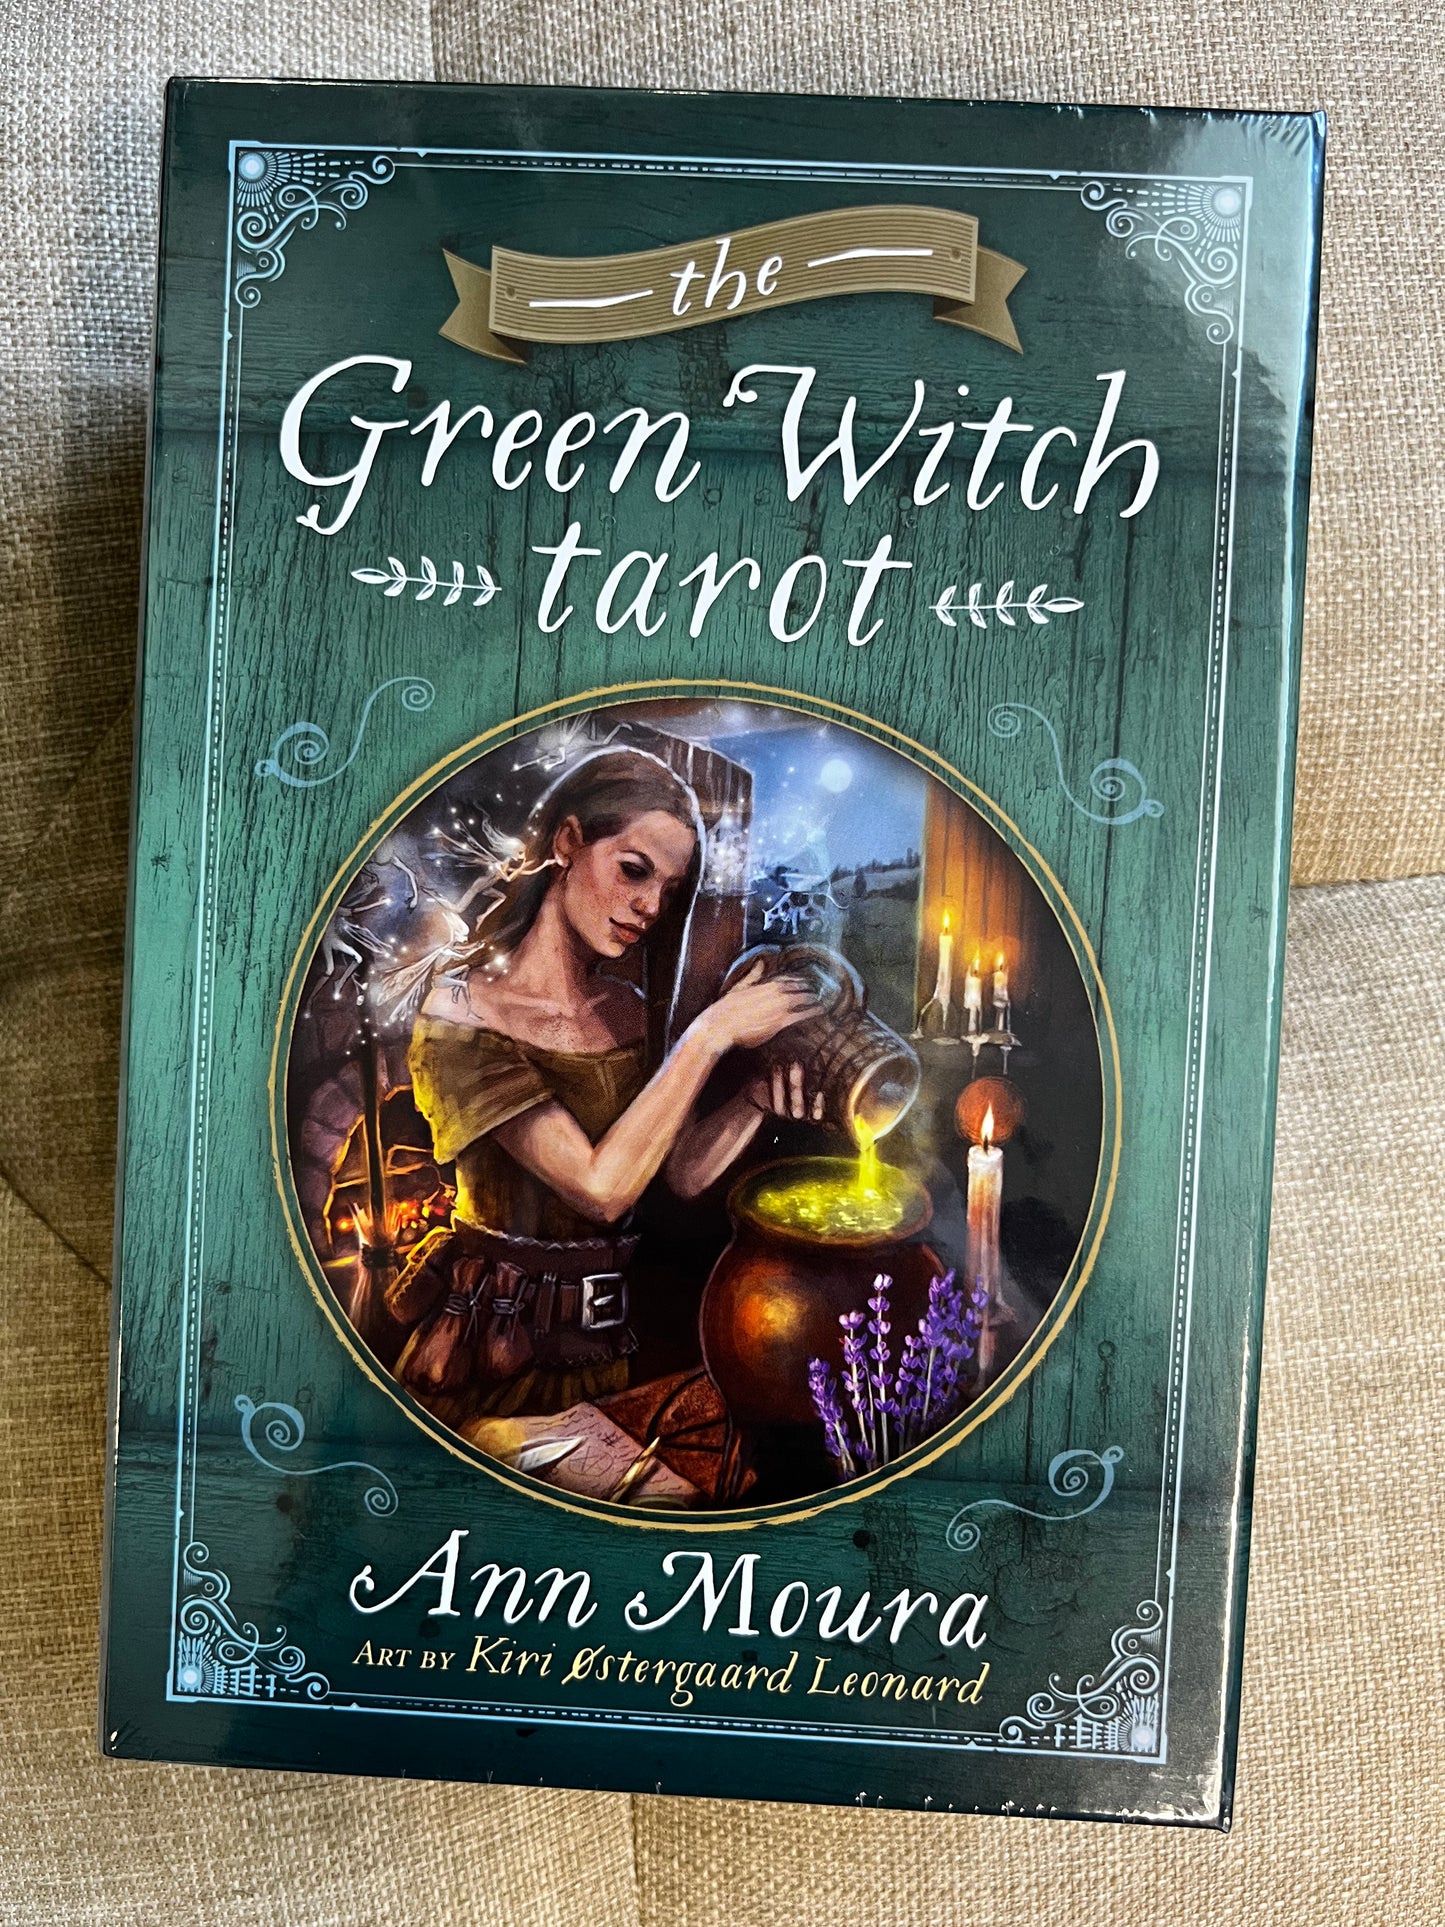 The Green Witch Tarot Deck